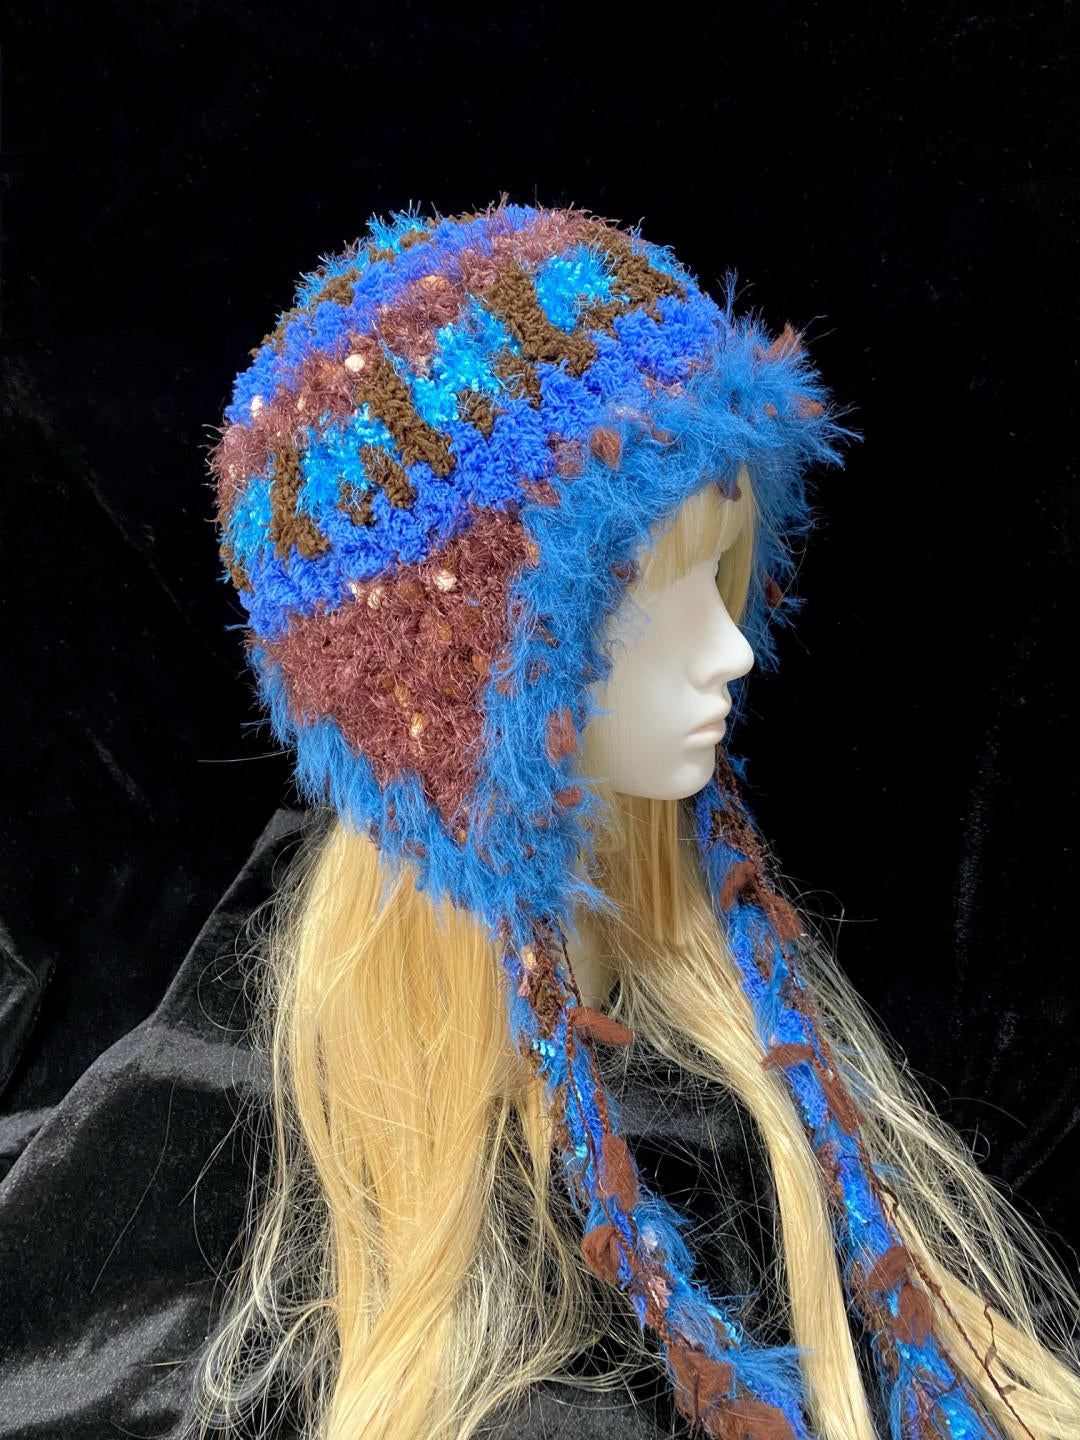 Handmade Crochet Hat